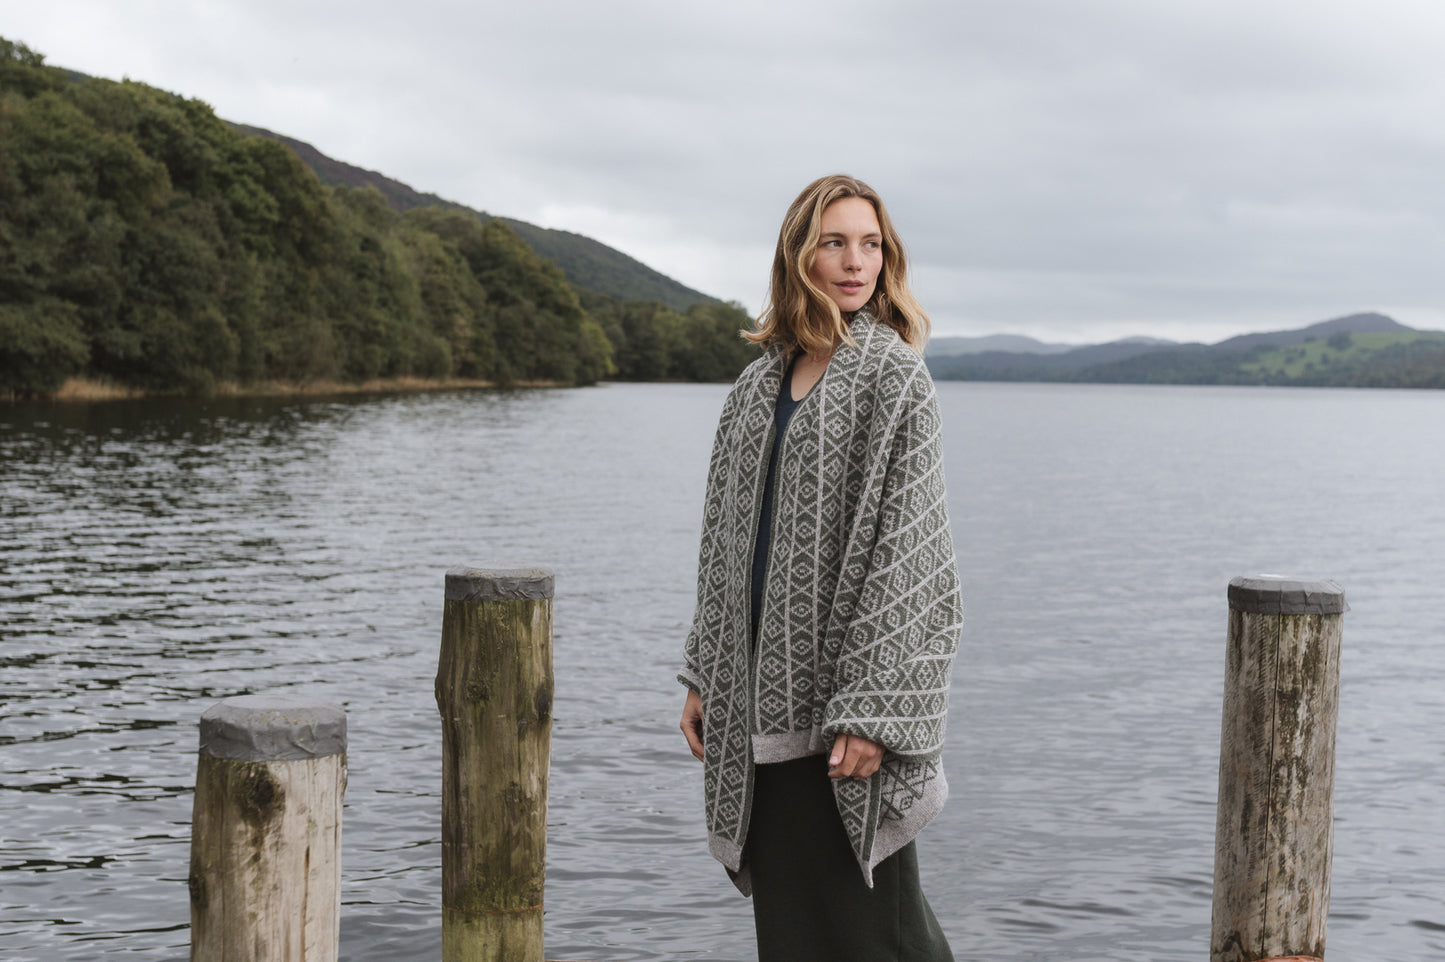 The Ruskin British Wool Jacquard Blanket in Sage Green / Grey